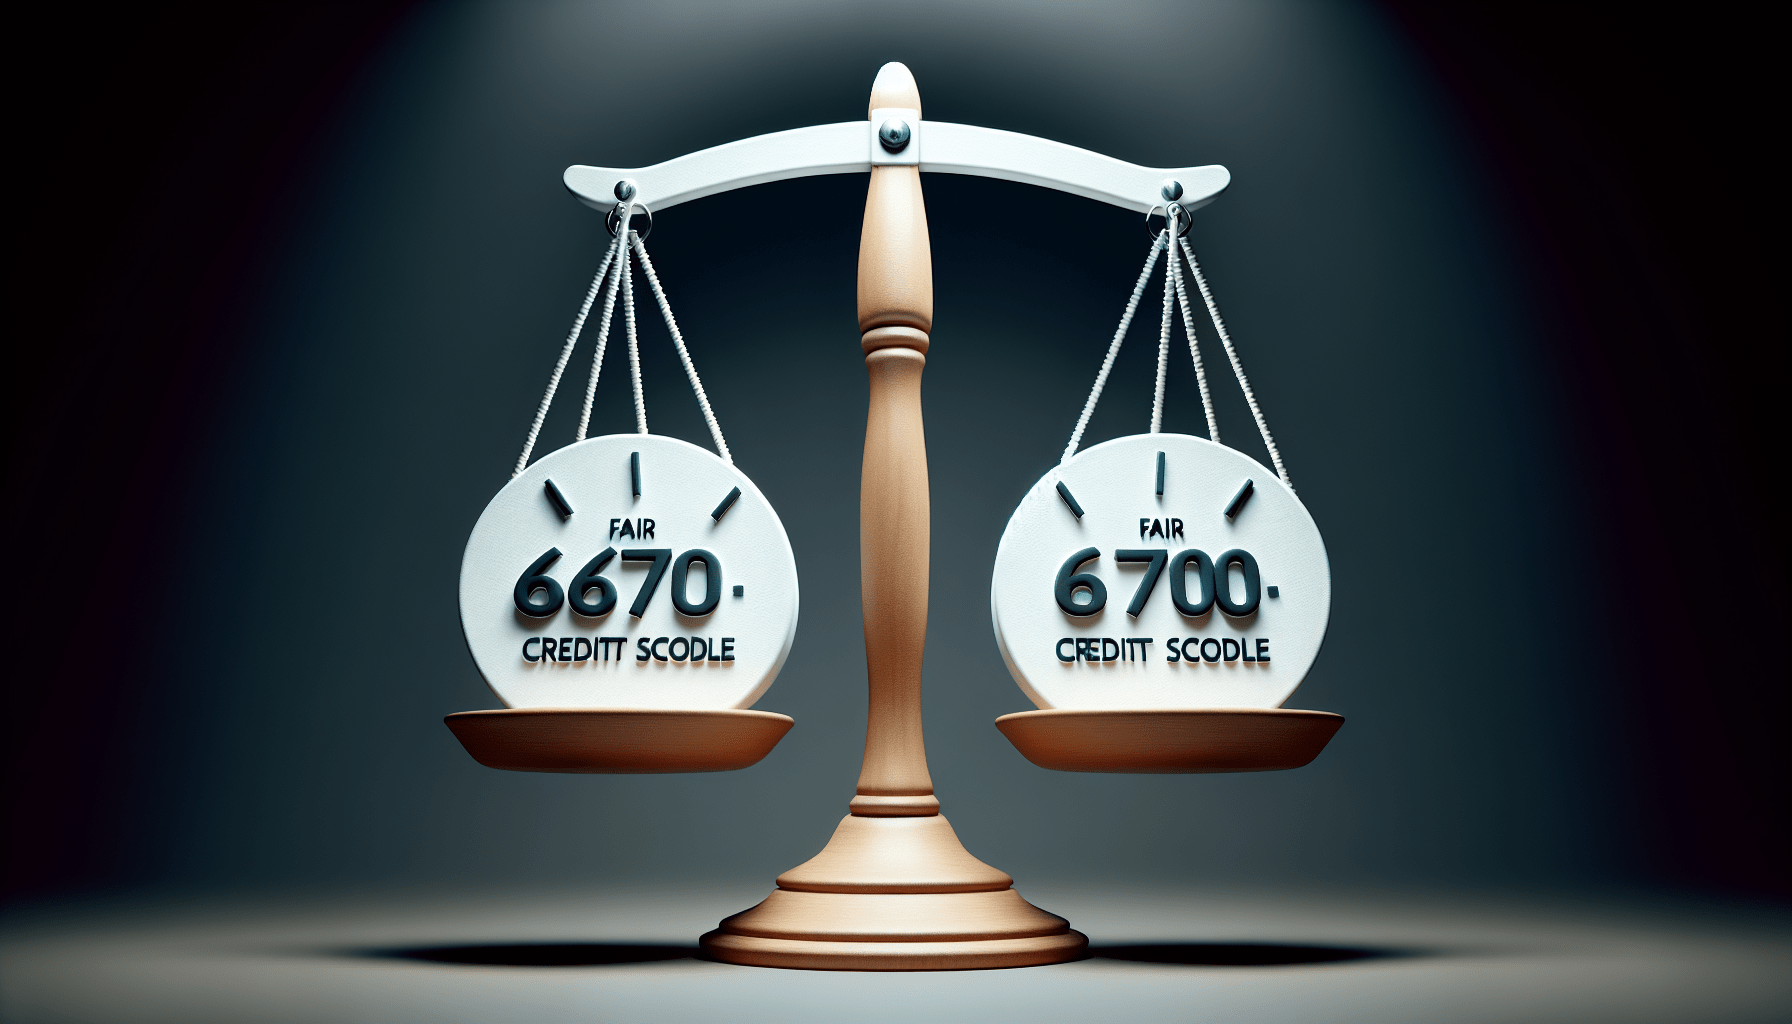 Personal Loans For Fair Credit Score (between 640-670)